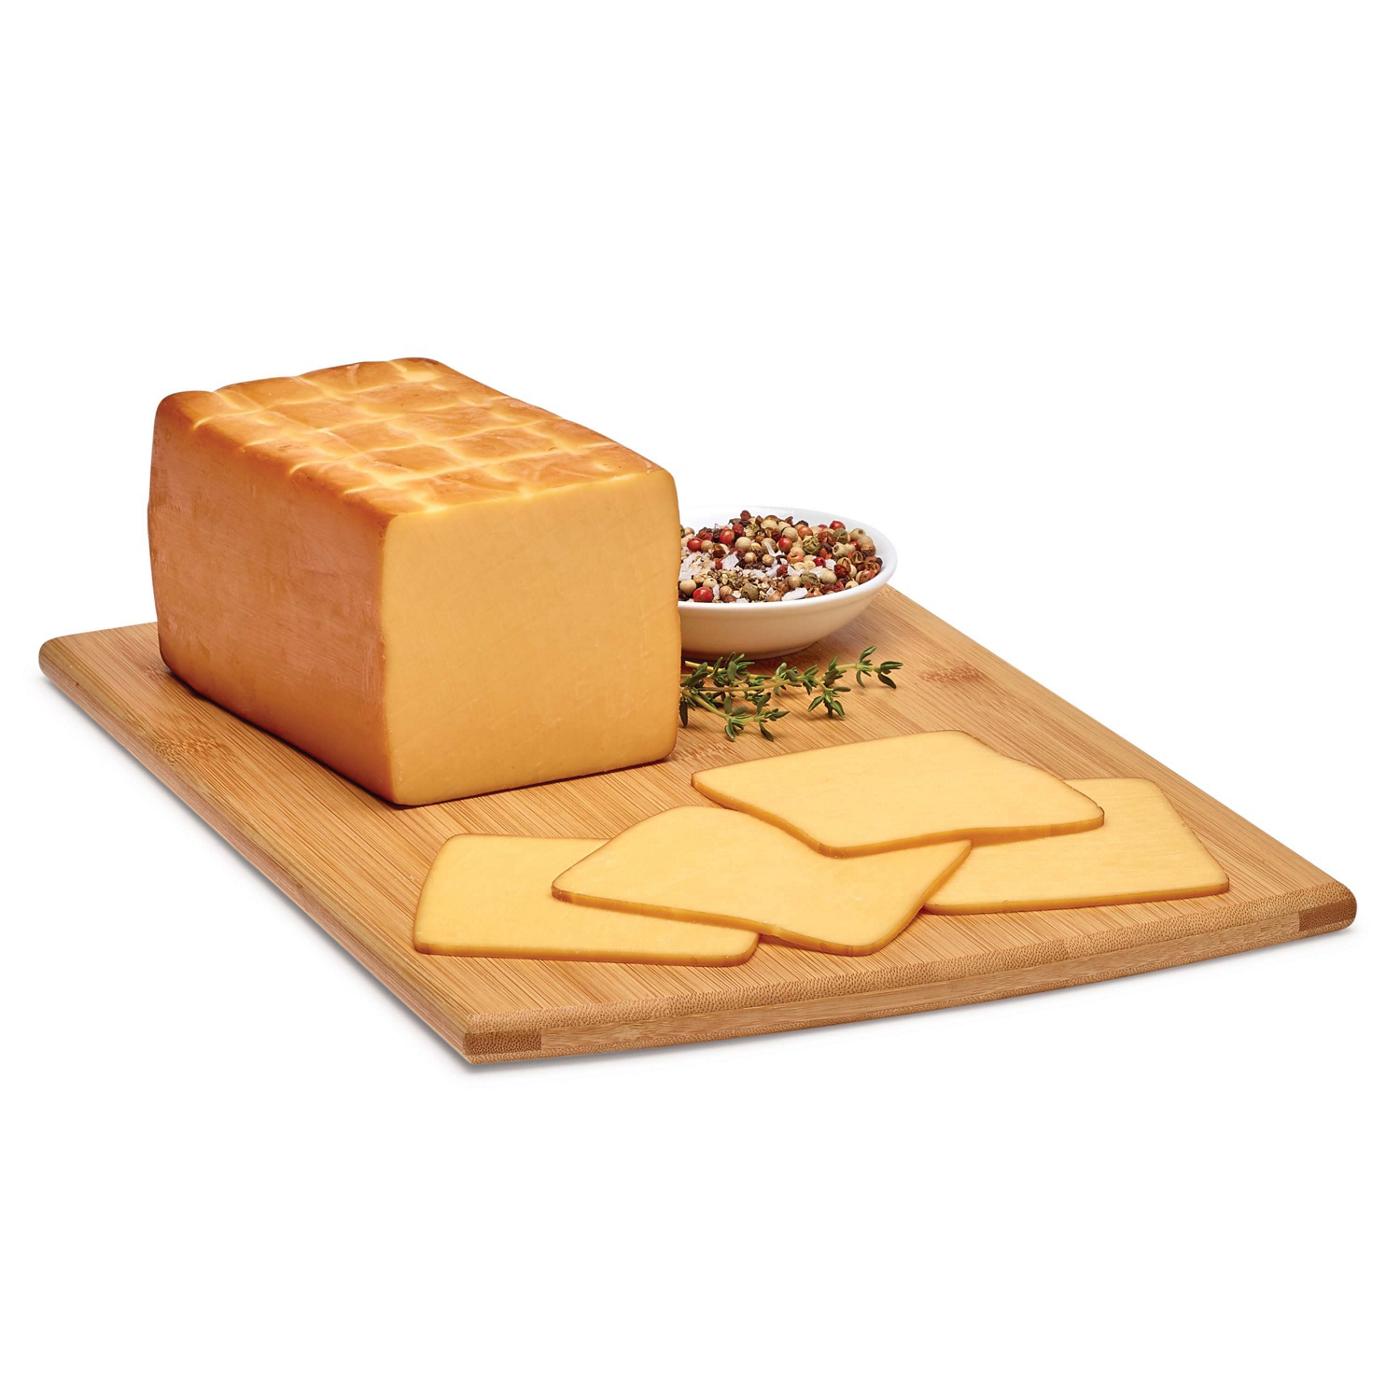 H-E-B Deli Sliced Post Oak Smoked Gouda Cheese; image 1 of 2